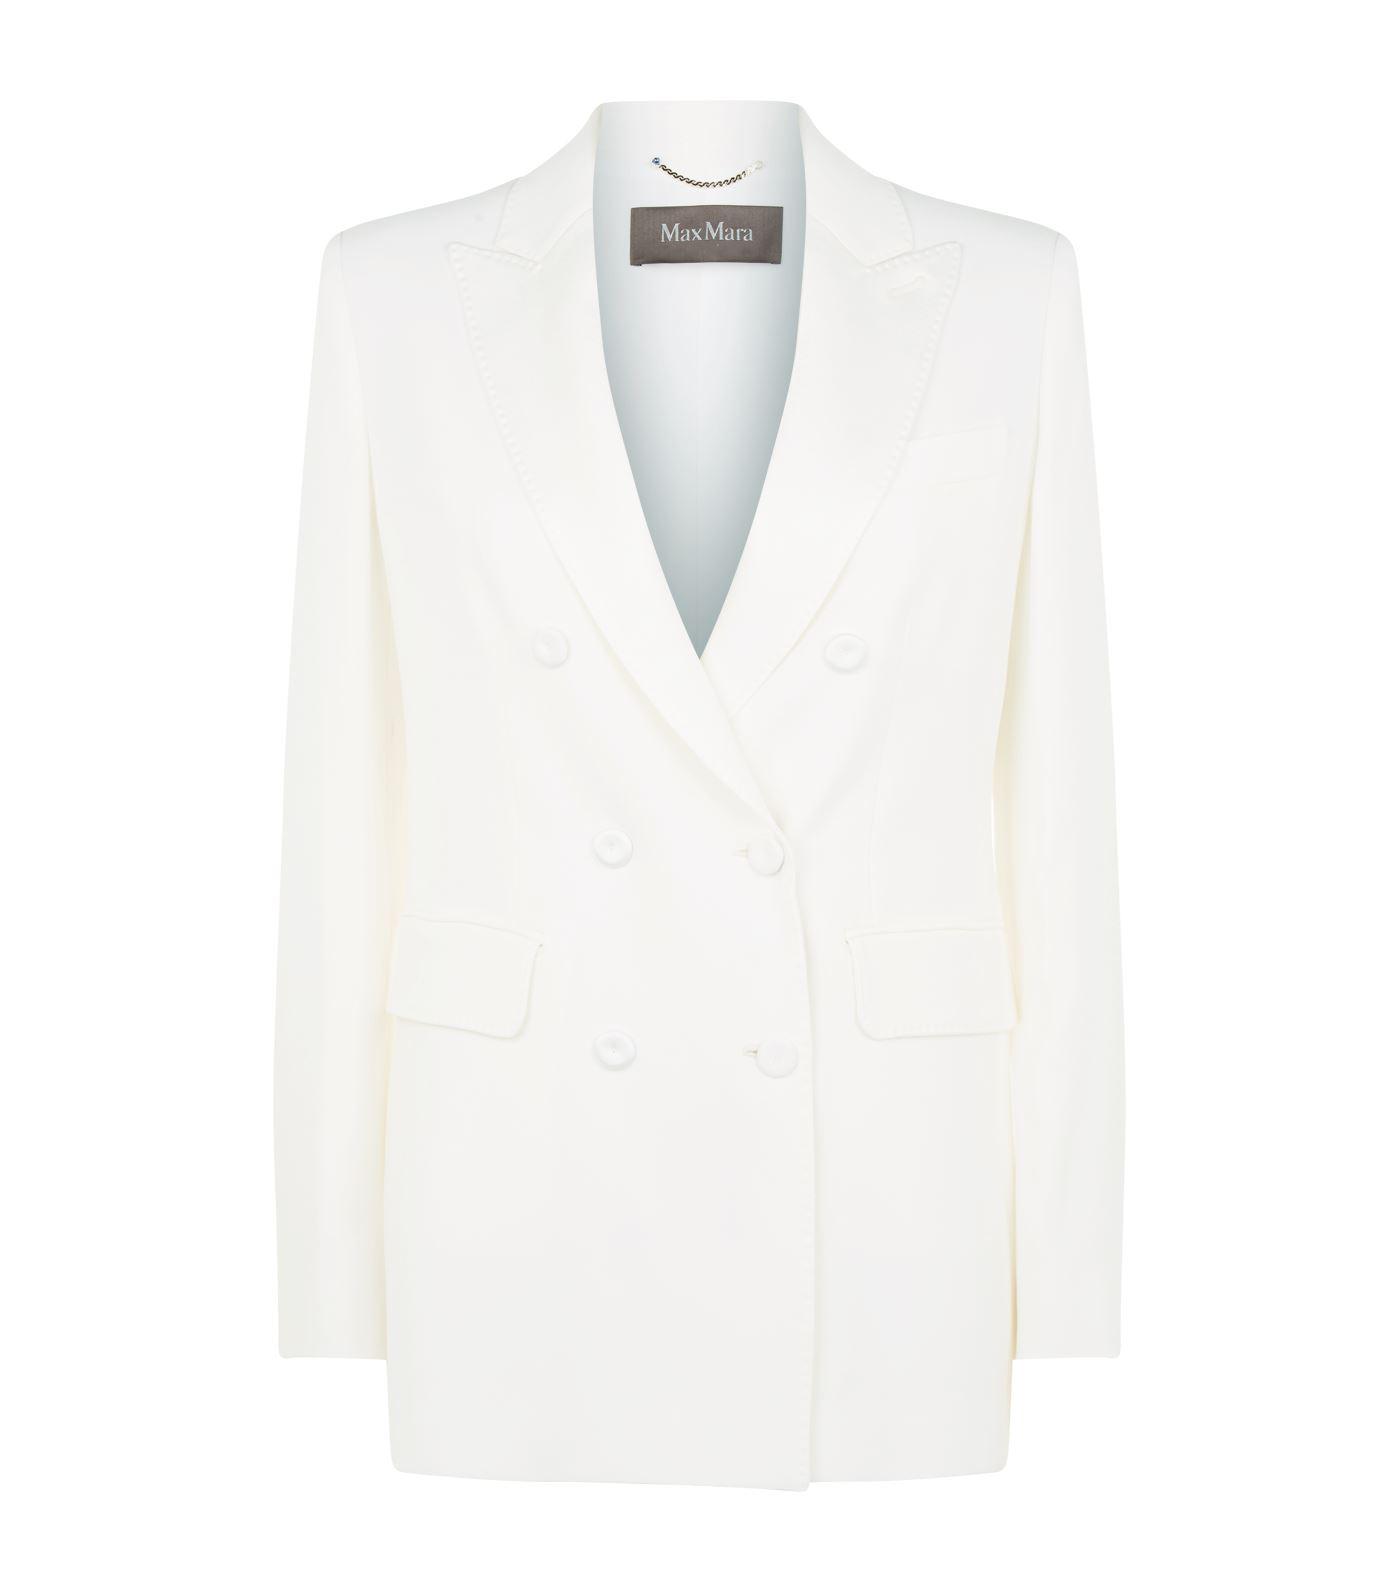 Max Mara Satin Double-breasted Tuxedo Jacket in White - Lyst